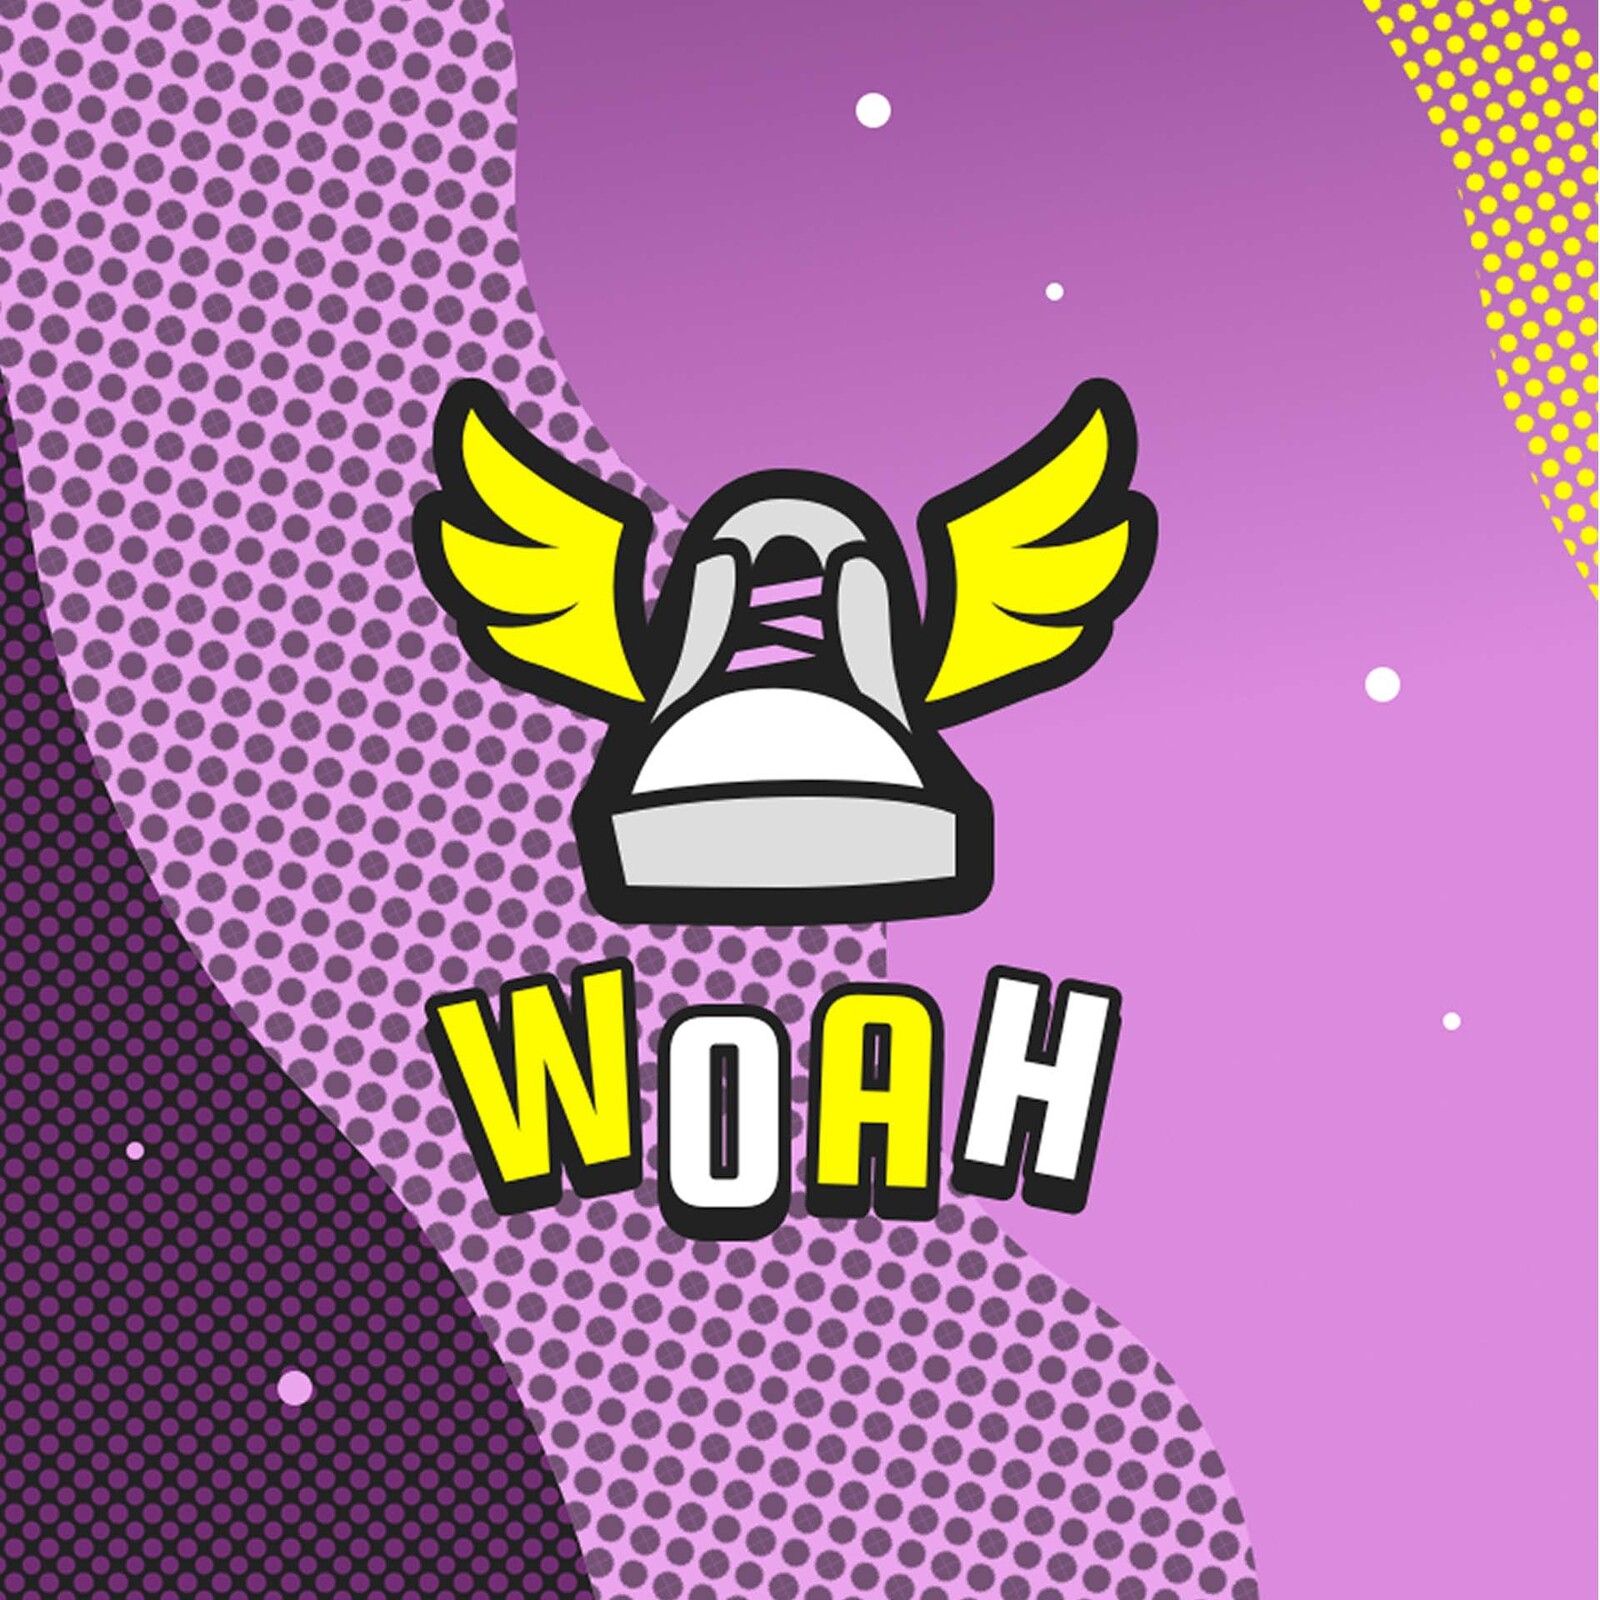 Woah logo on splash screen